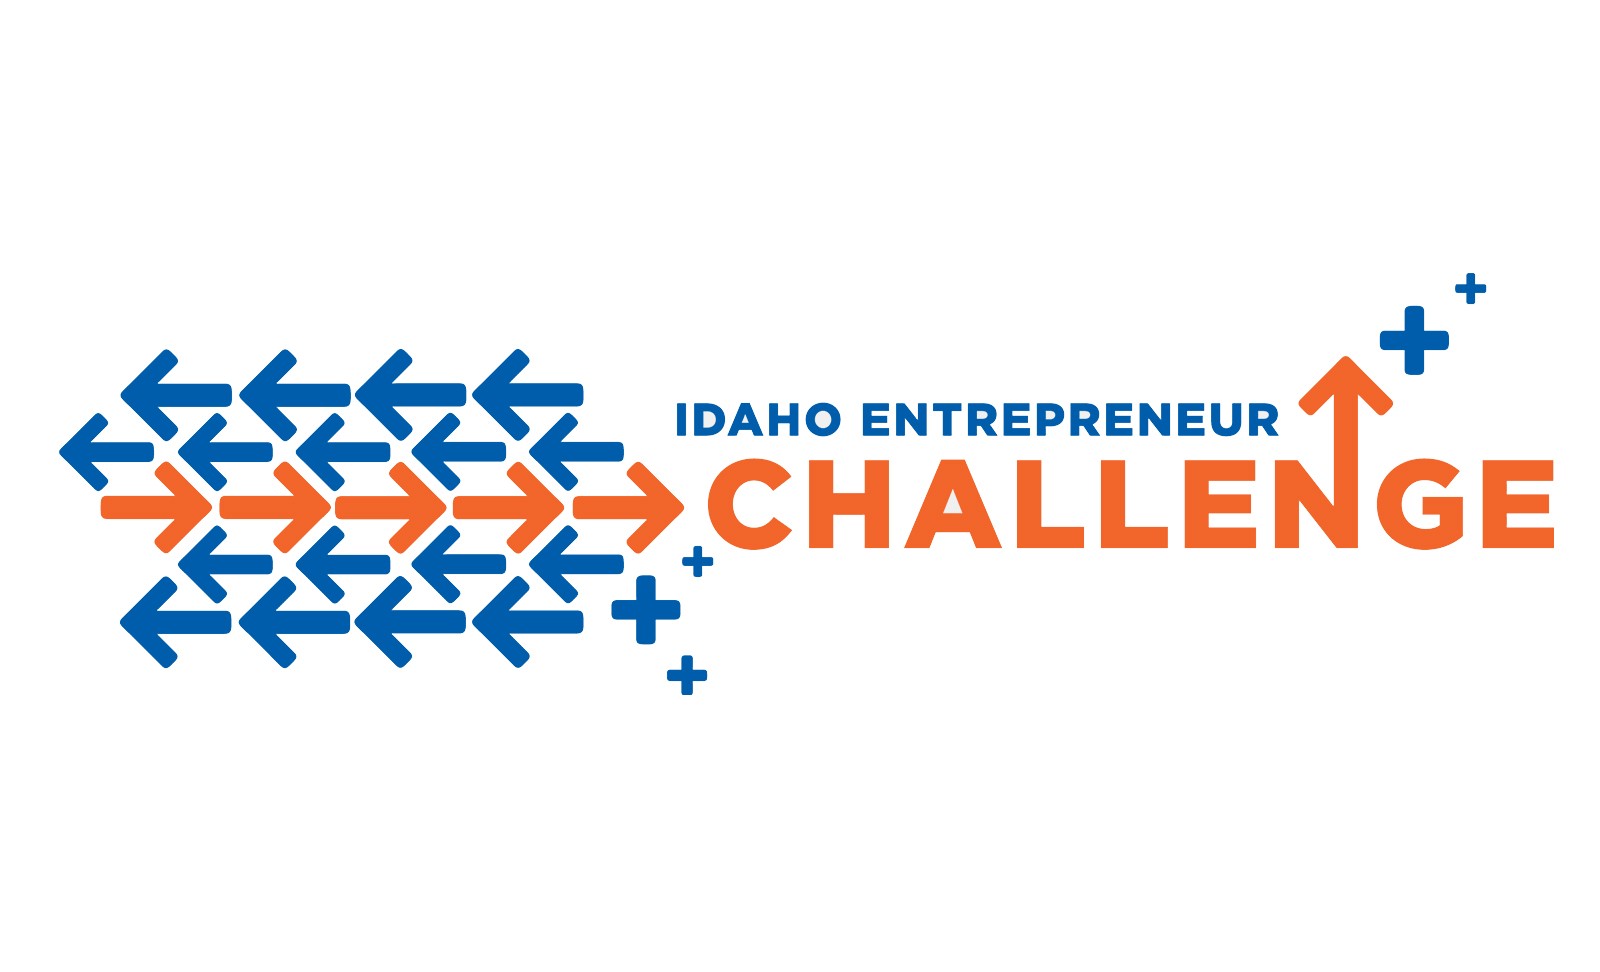 Idaho Entrepreneur Challenge logo